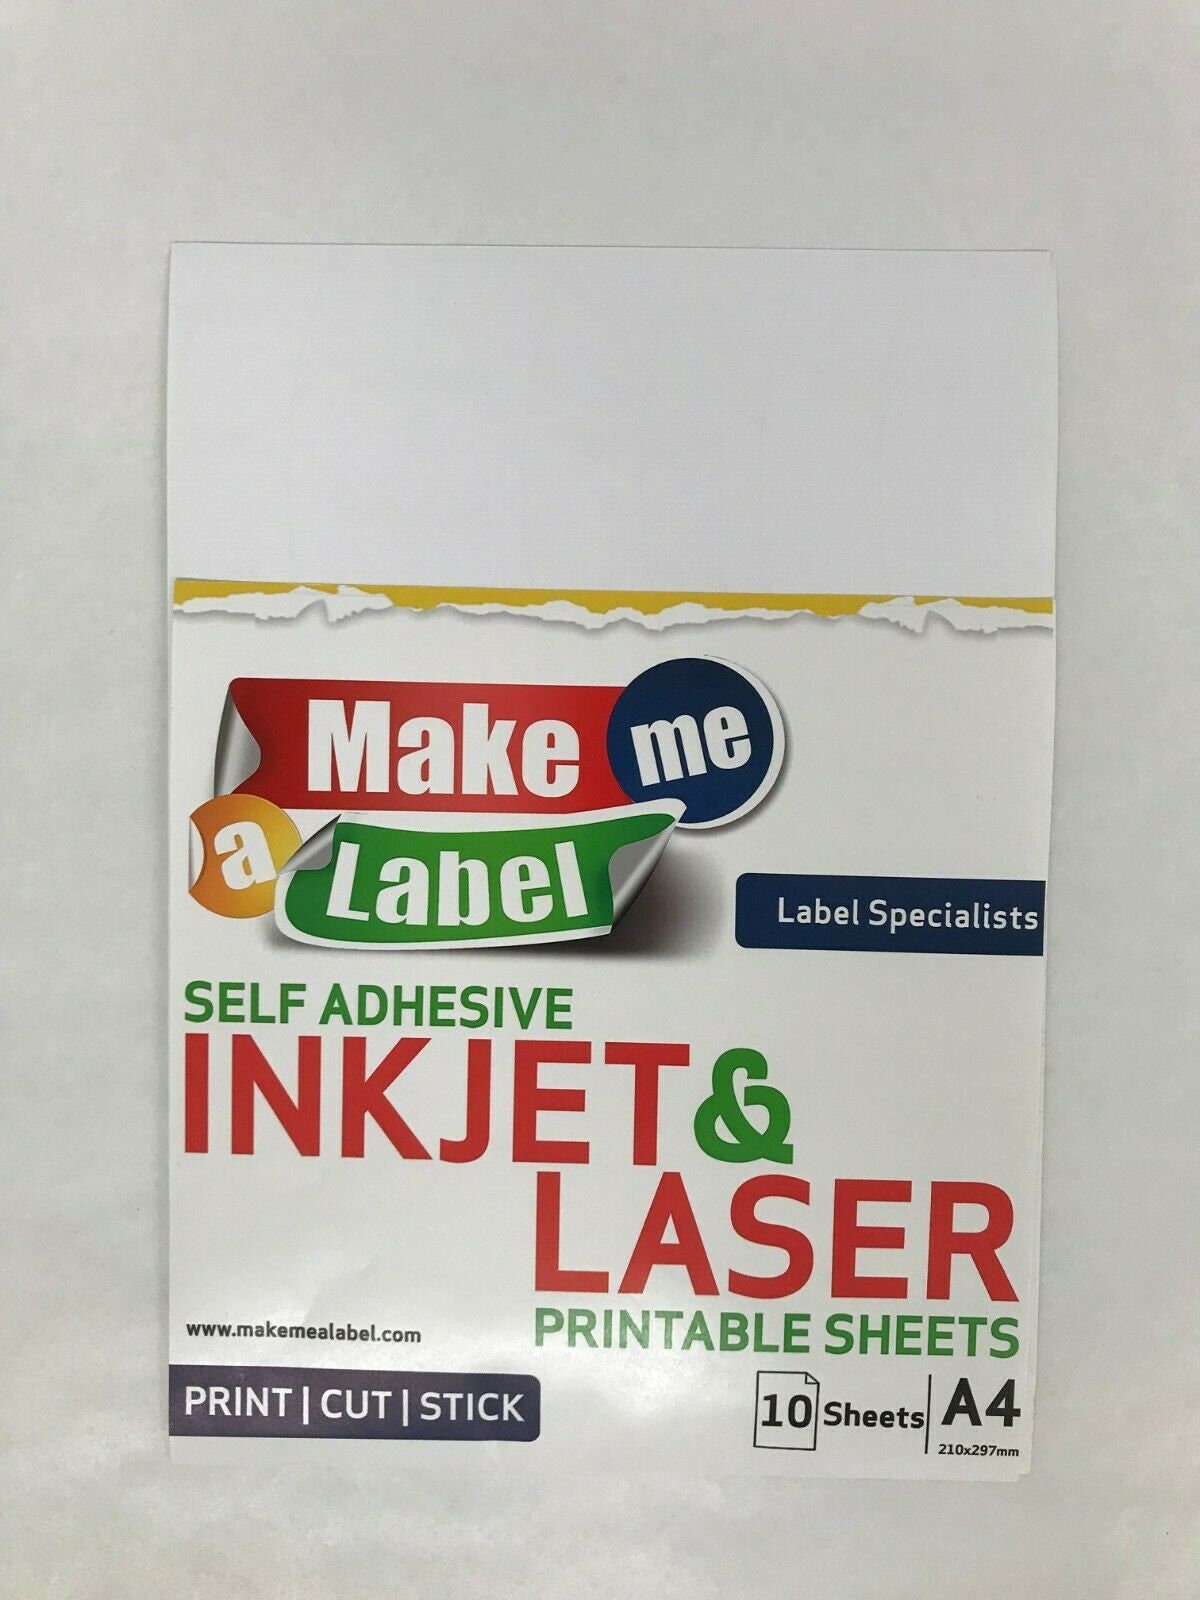 A4 Printable Self Adhesive Sticker Writing Paper Printer Paper Sheet White Matte 